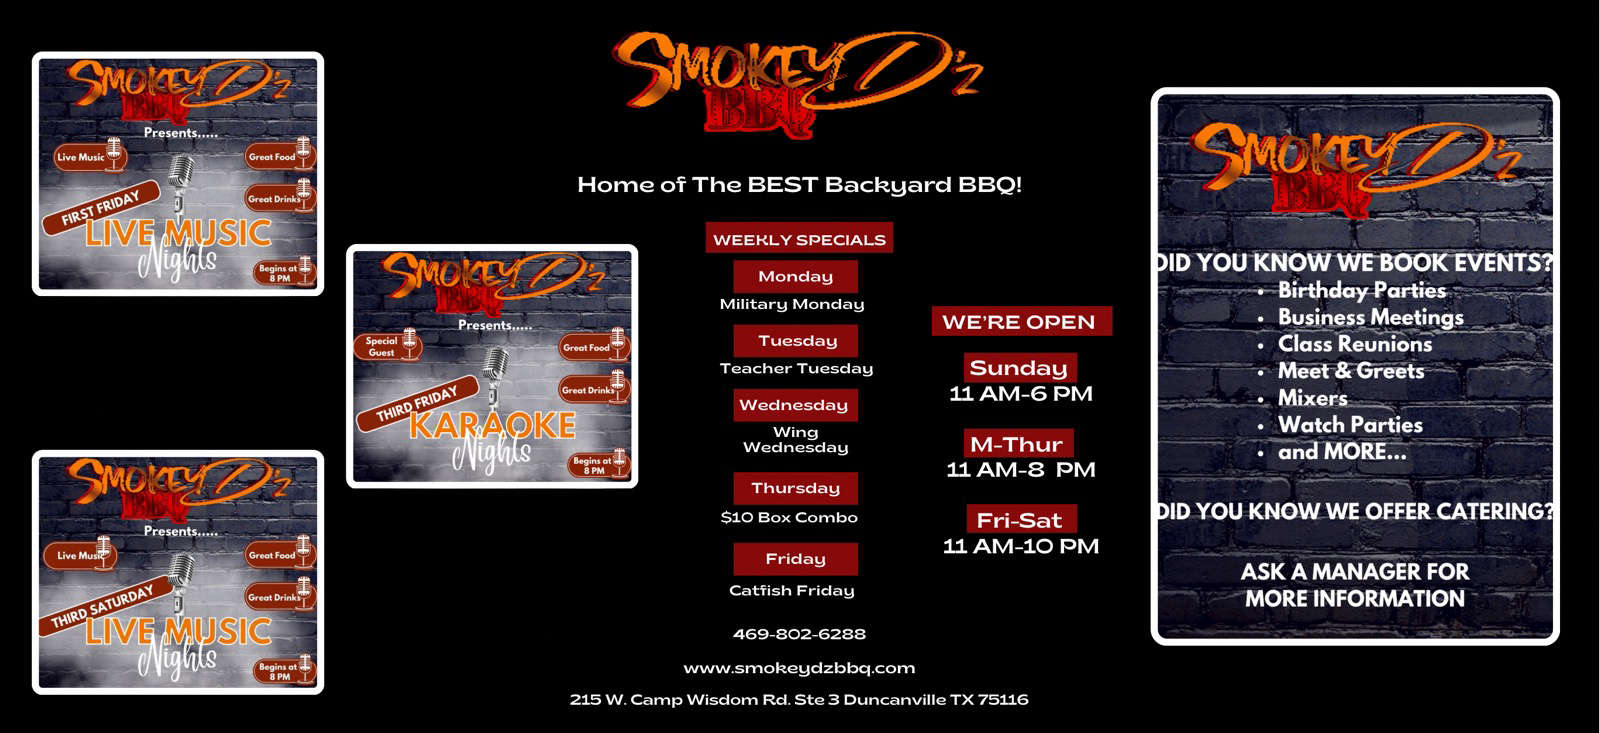 Smokey D'z BBQ. Home of the BEST backyard BBQ!